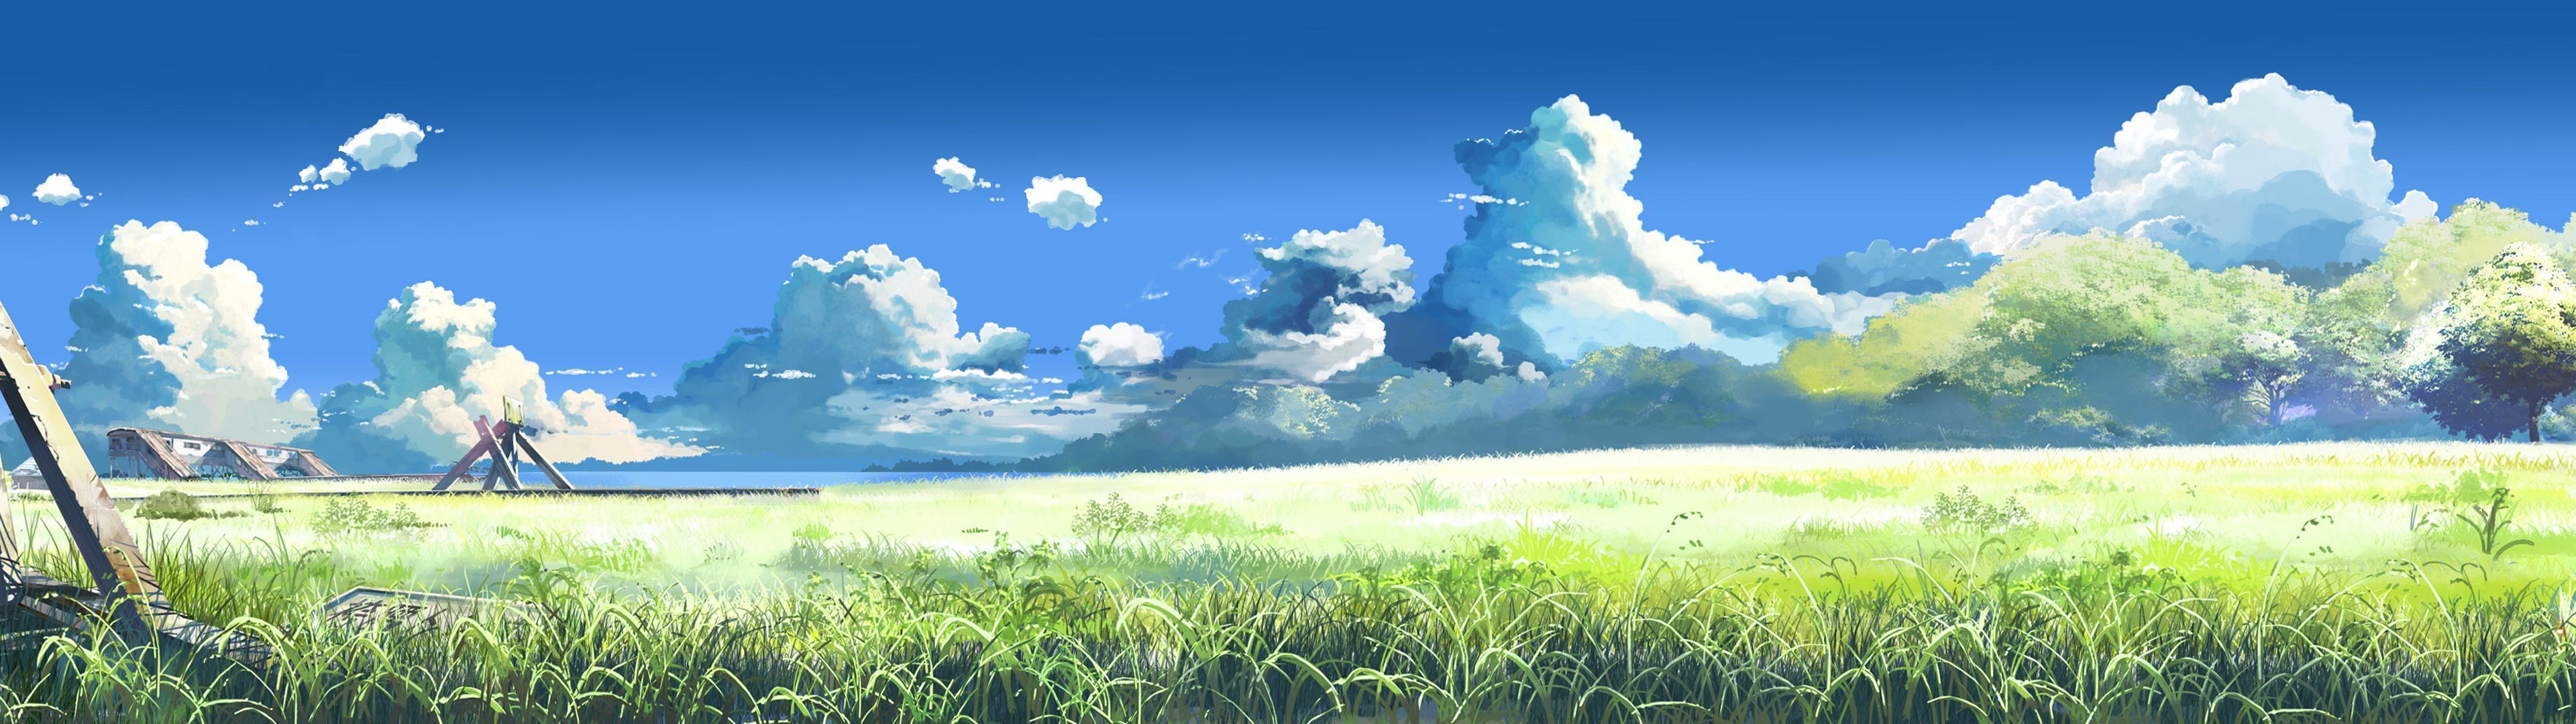 anime landscape wallpaper 1080